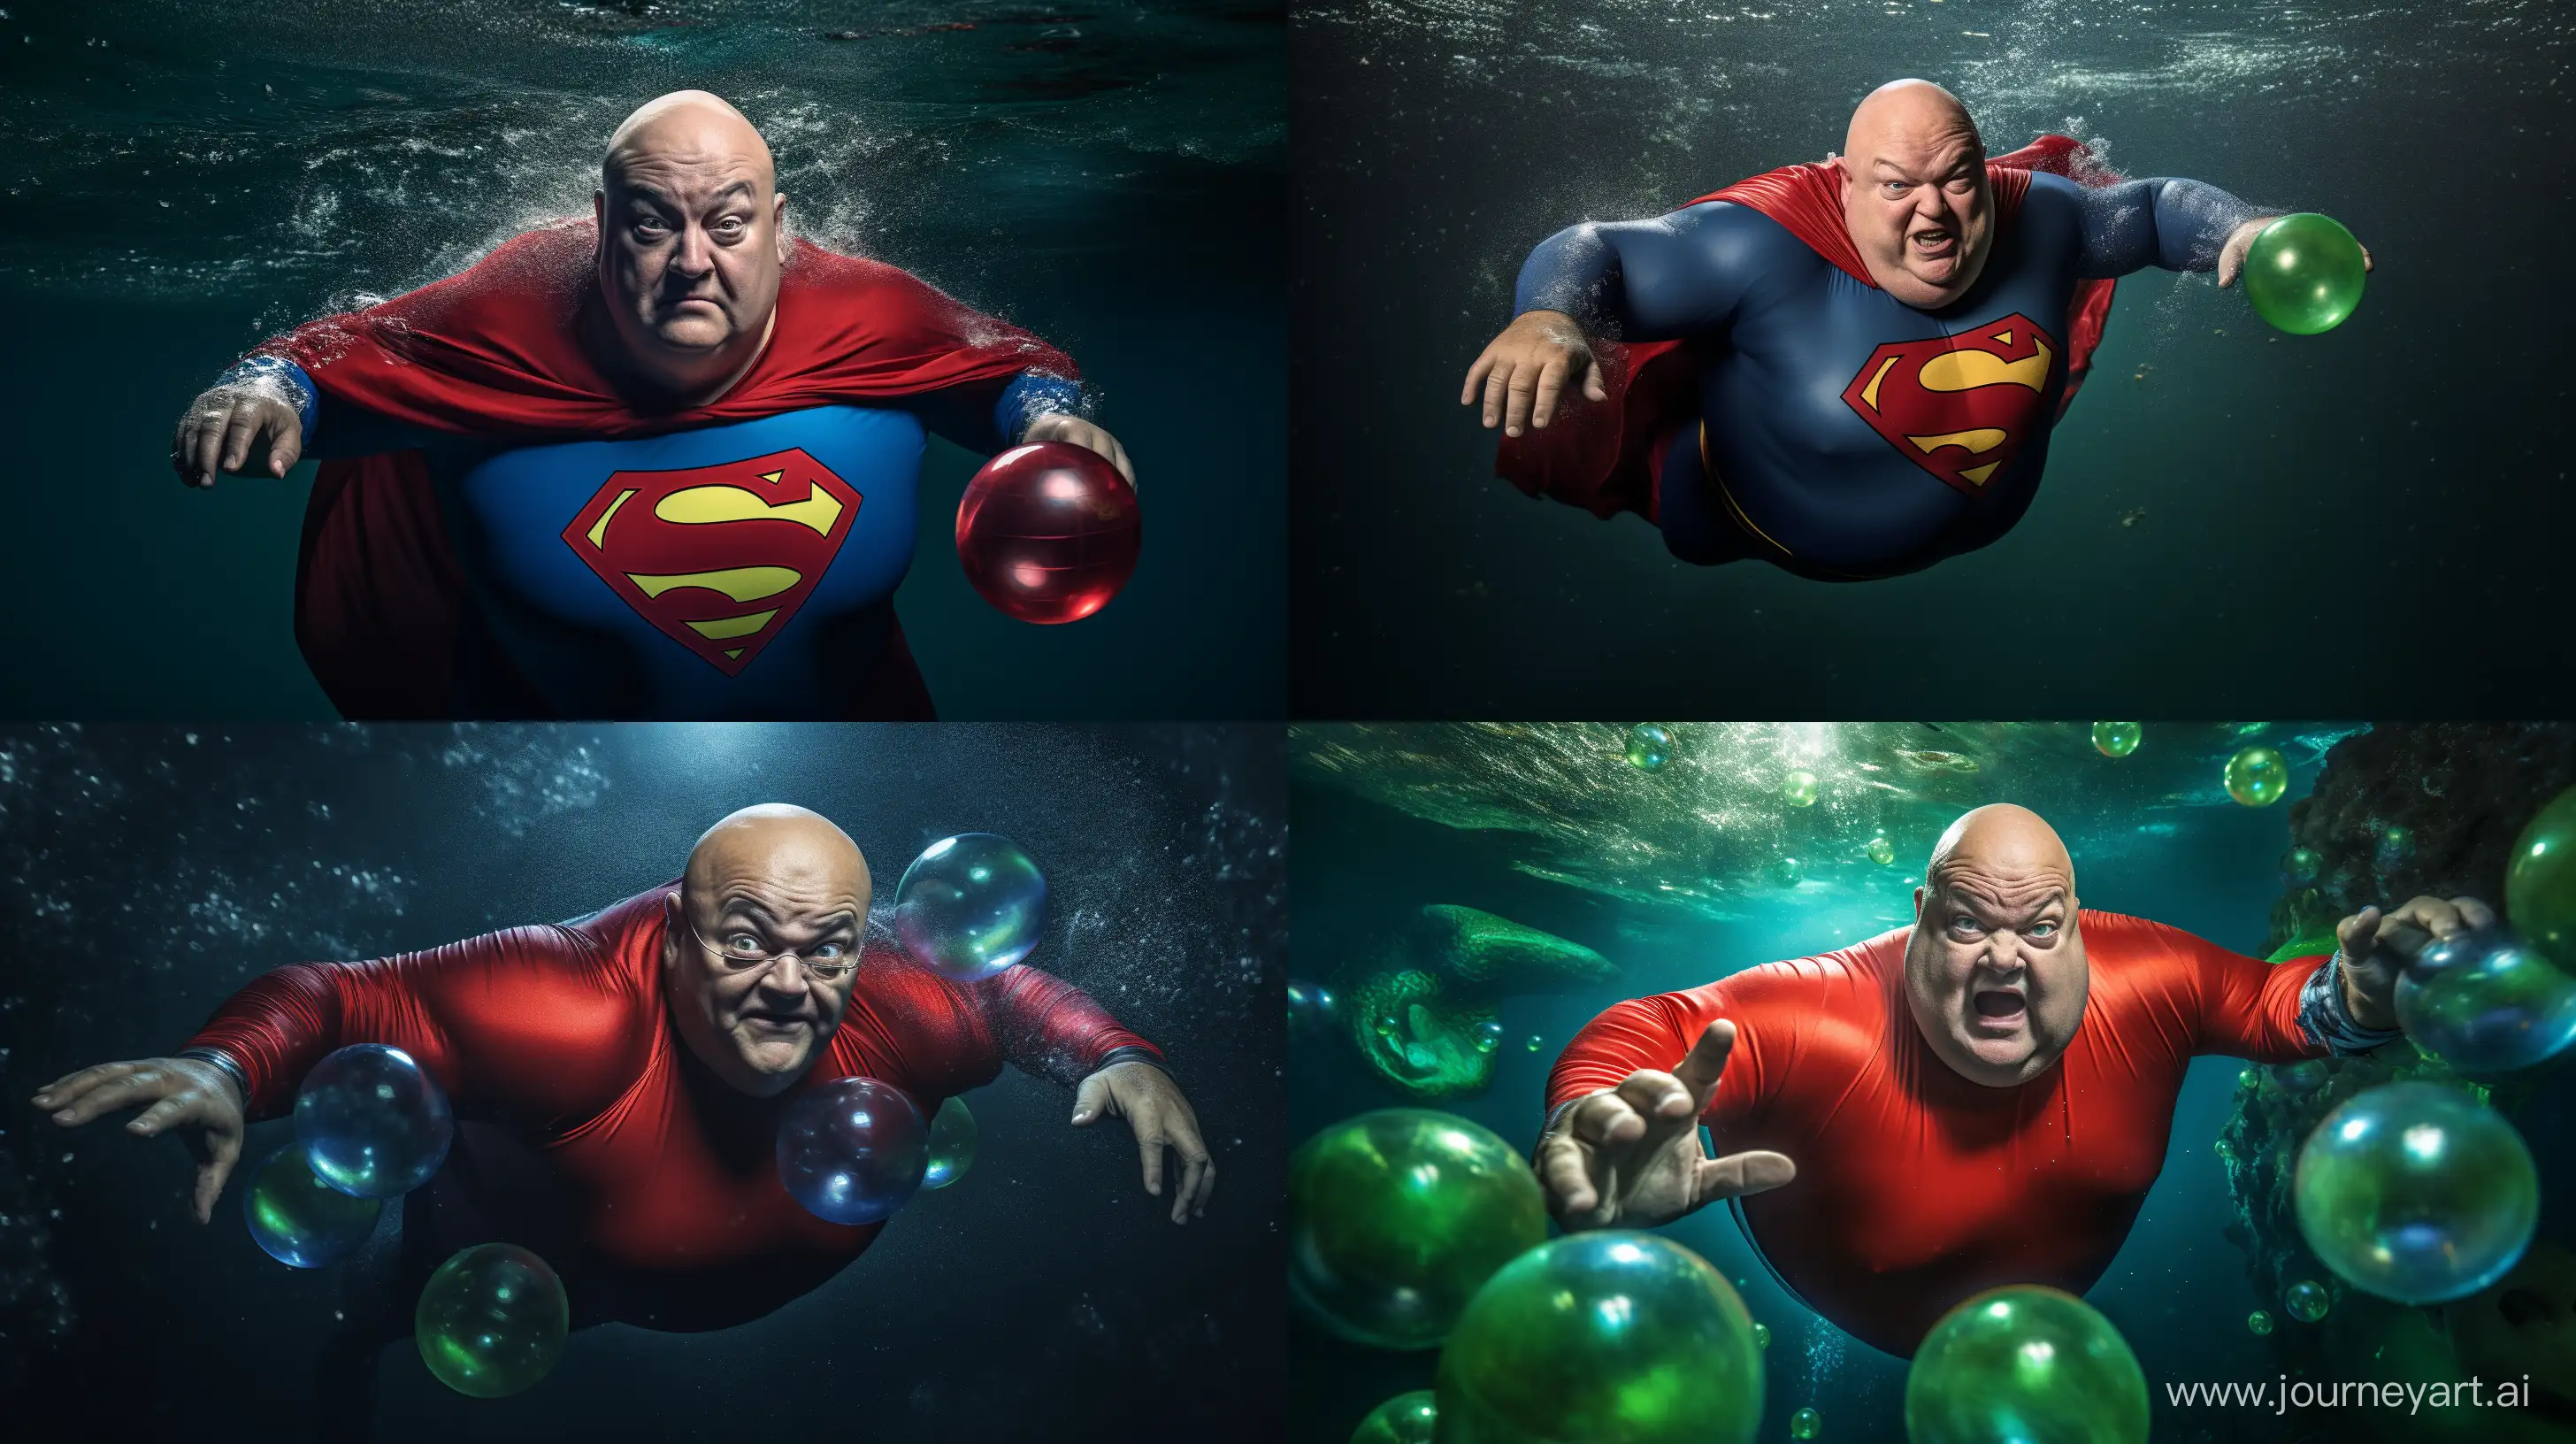 Elderly-Superman-Dives-into-Adventure-with-Illuminated-Ball